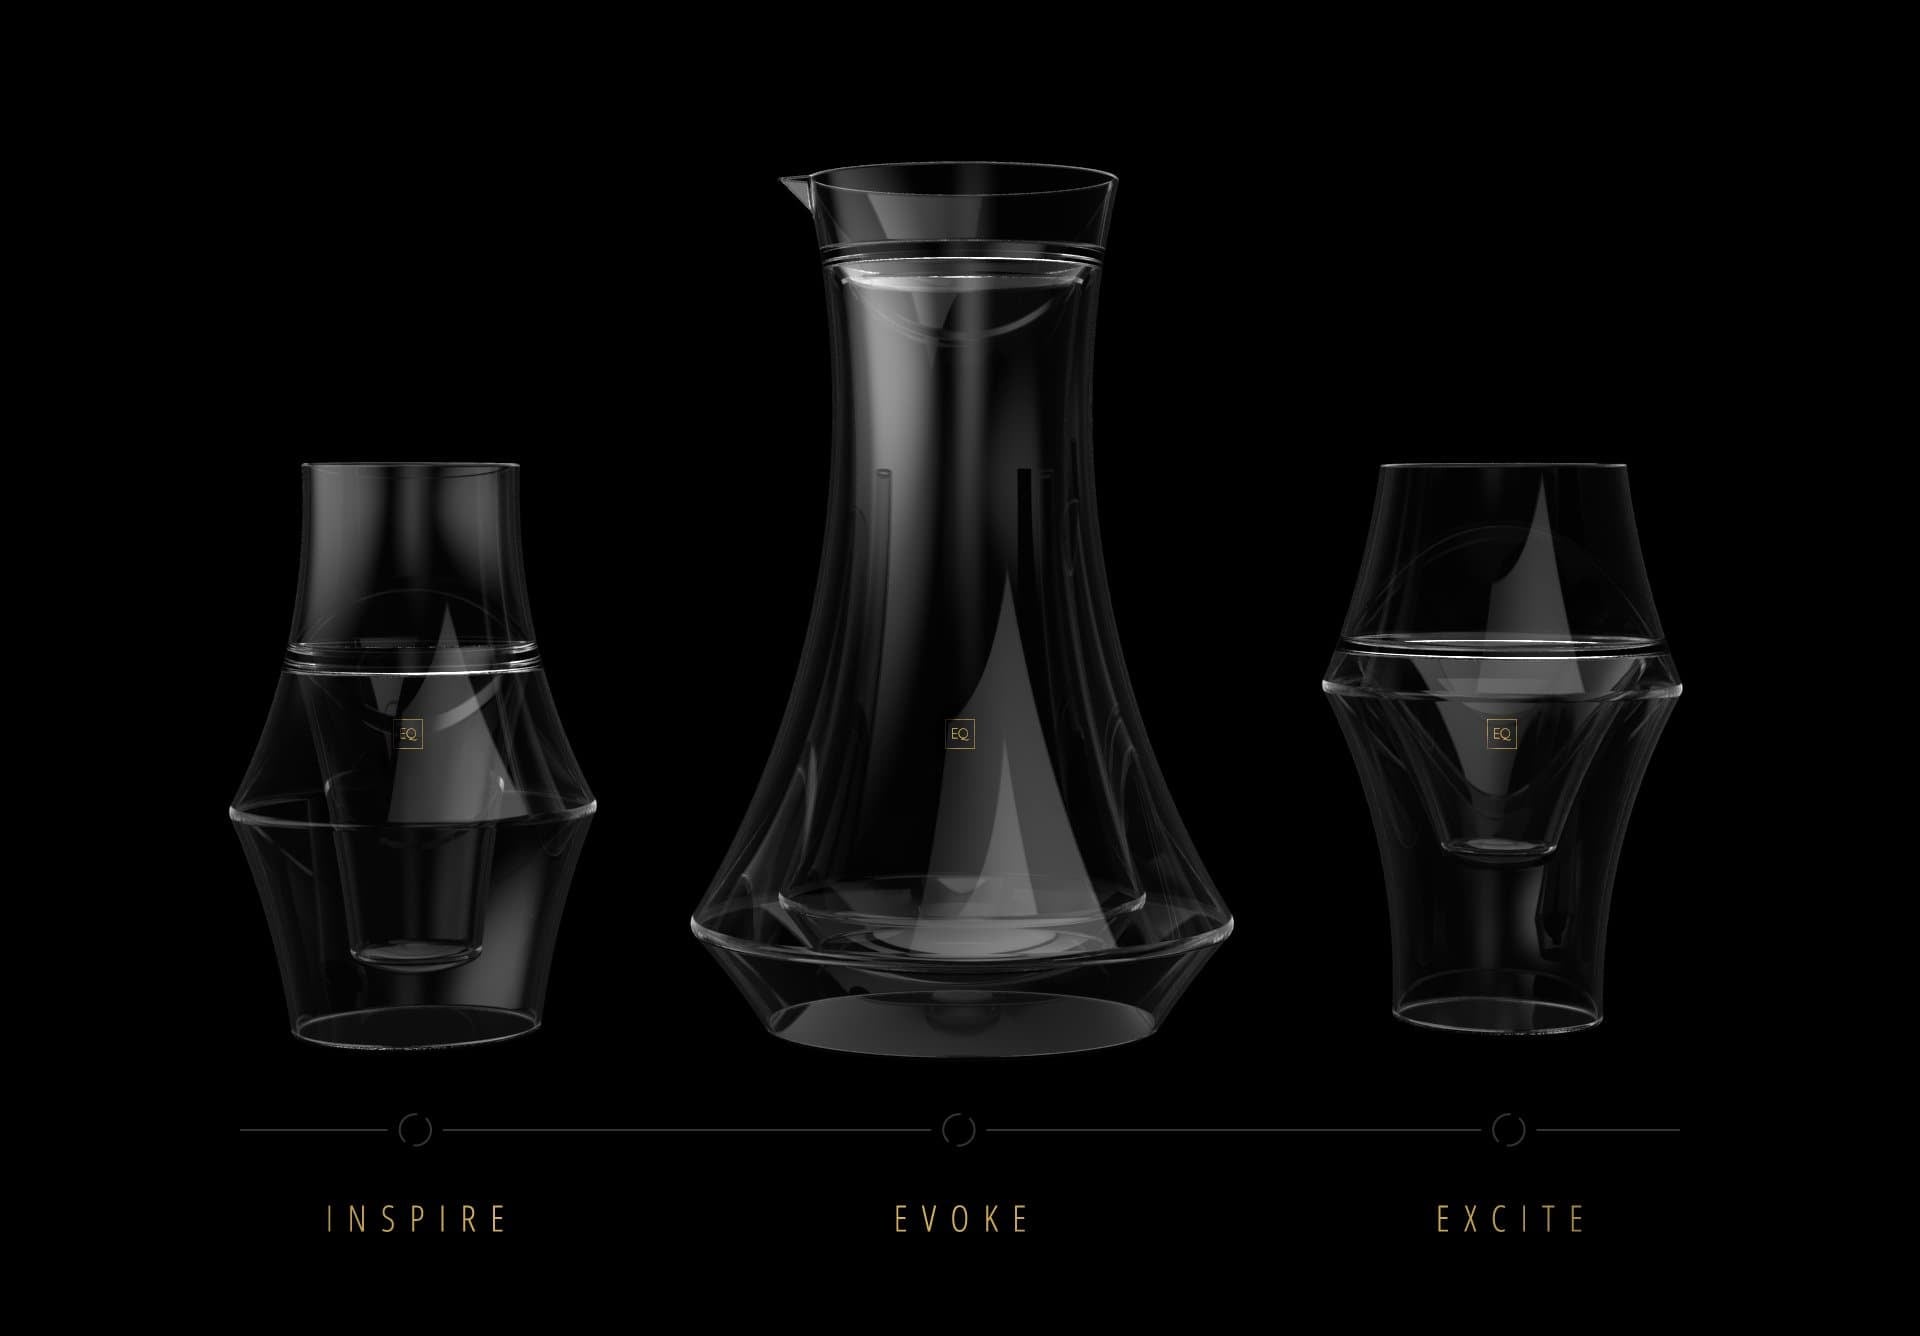 Excite Glass, Inspire Glass, and Evoke Carafe